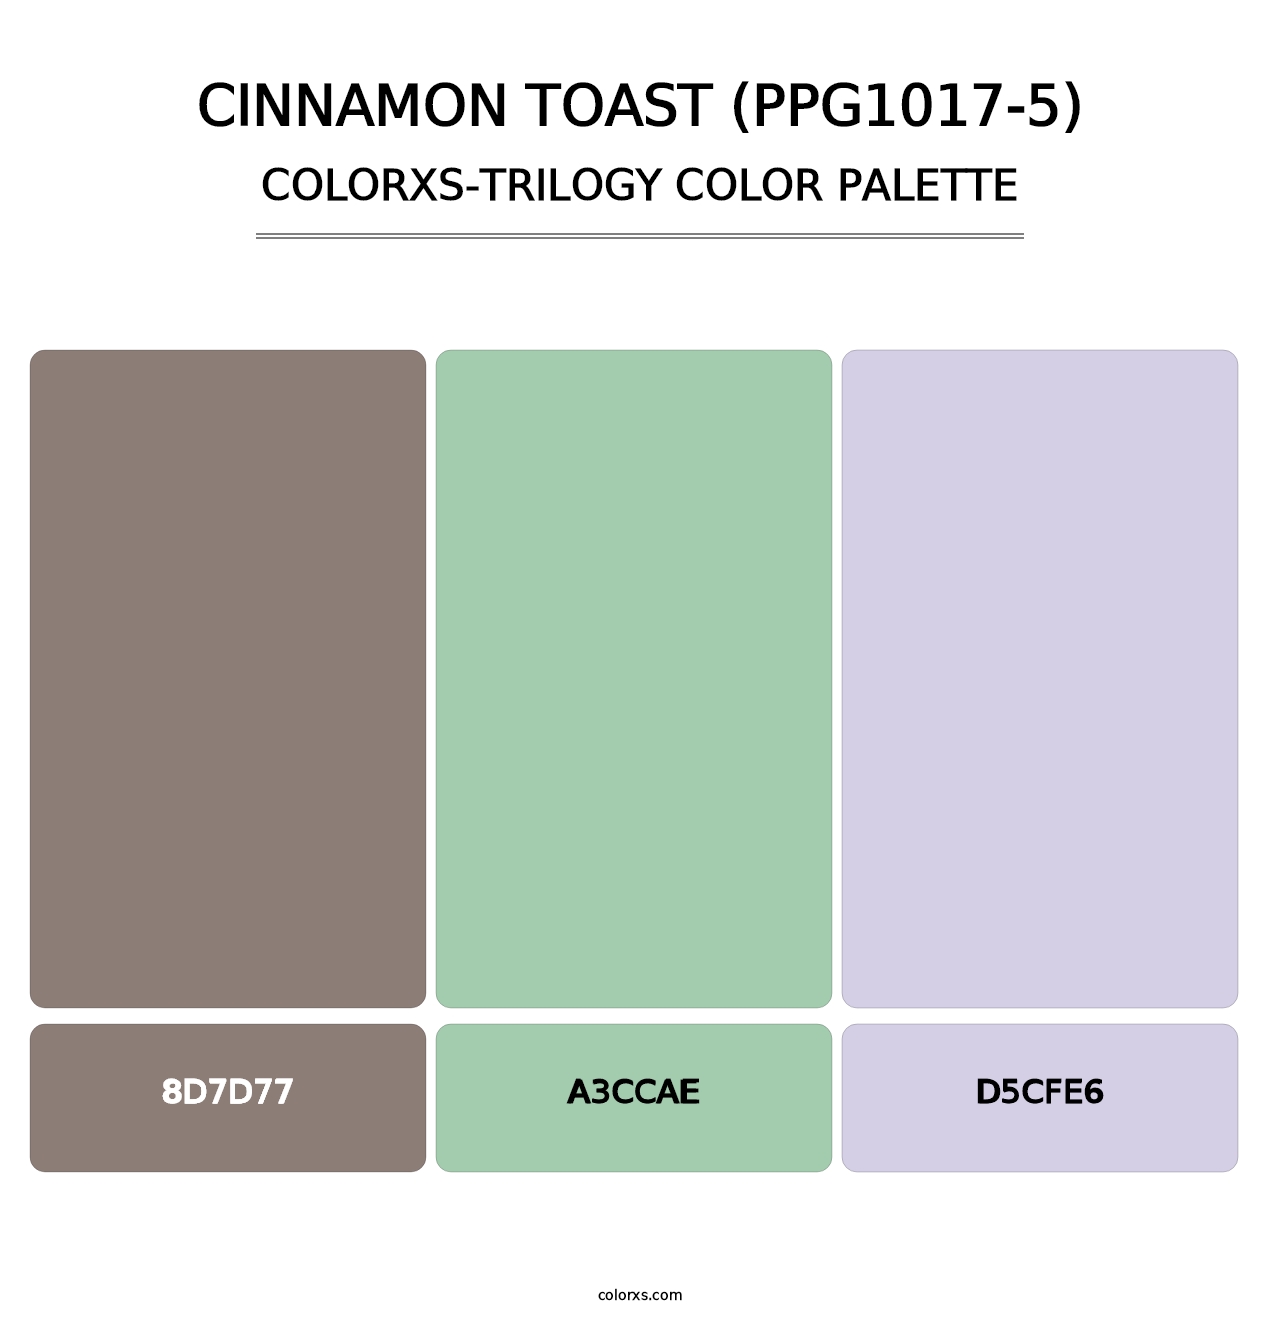 Cinnamon Toast (PPG1017-5) - Colorxs Trilogy Palette